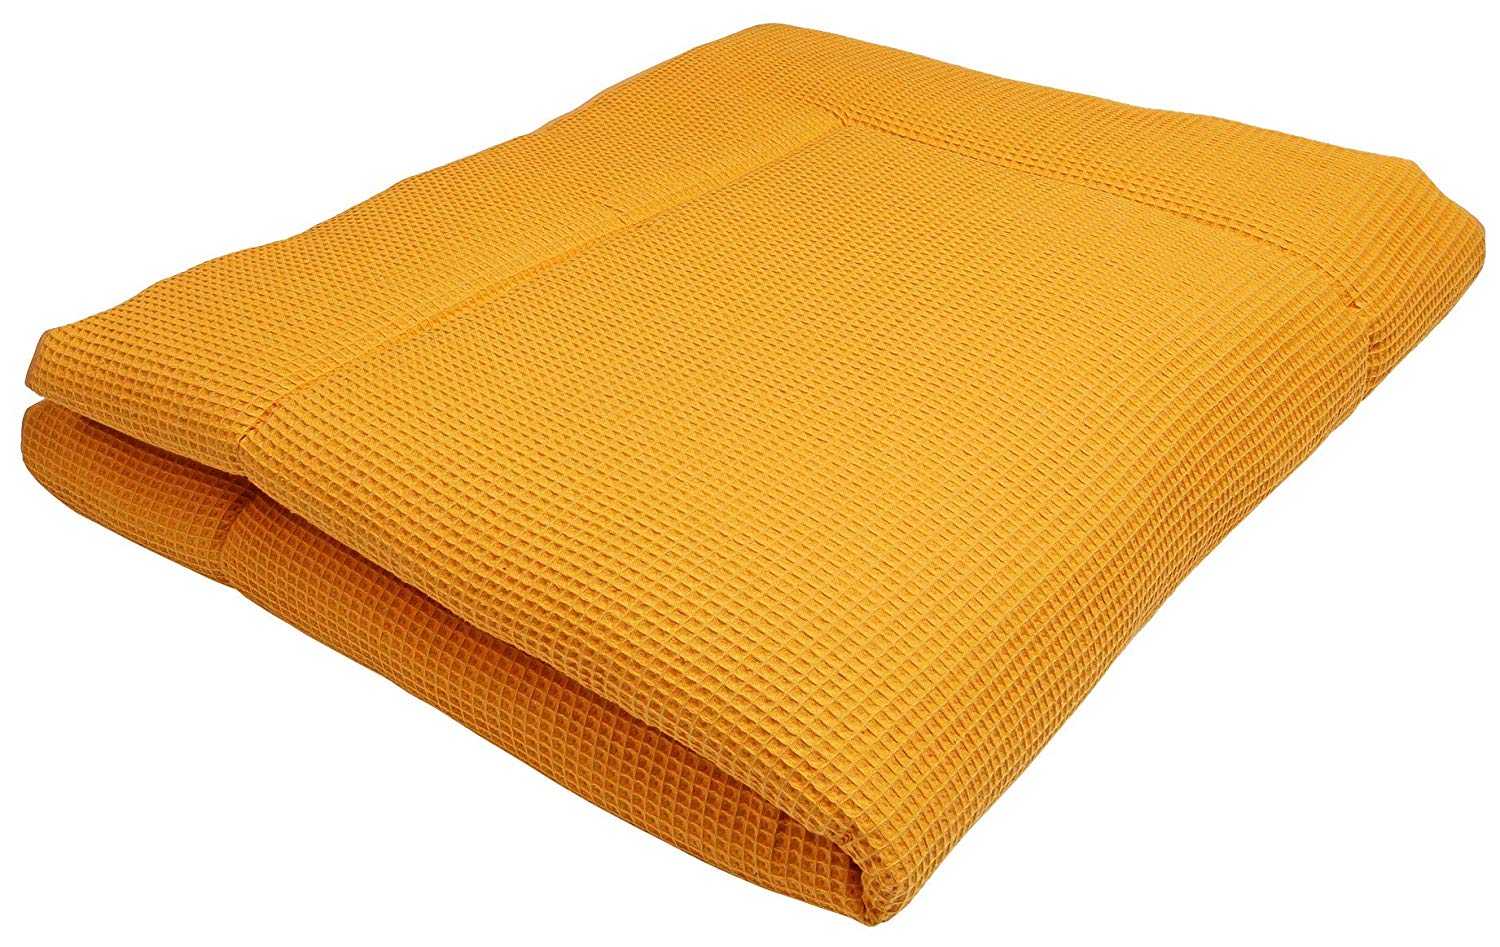 Ideenreich Ideenreich 2477 Baby Crawling Blanket King Size Mustard 135 x 150 cm Ideal as Play Mat and Playpen Insert Yellow